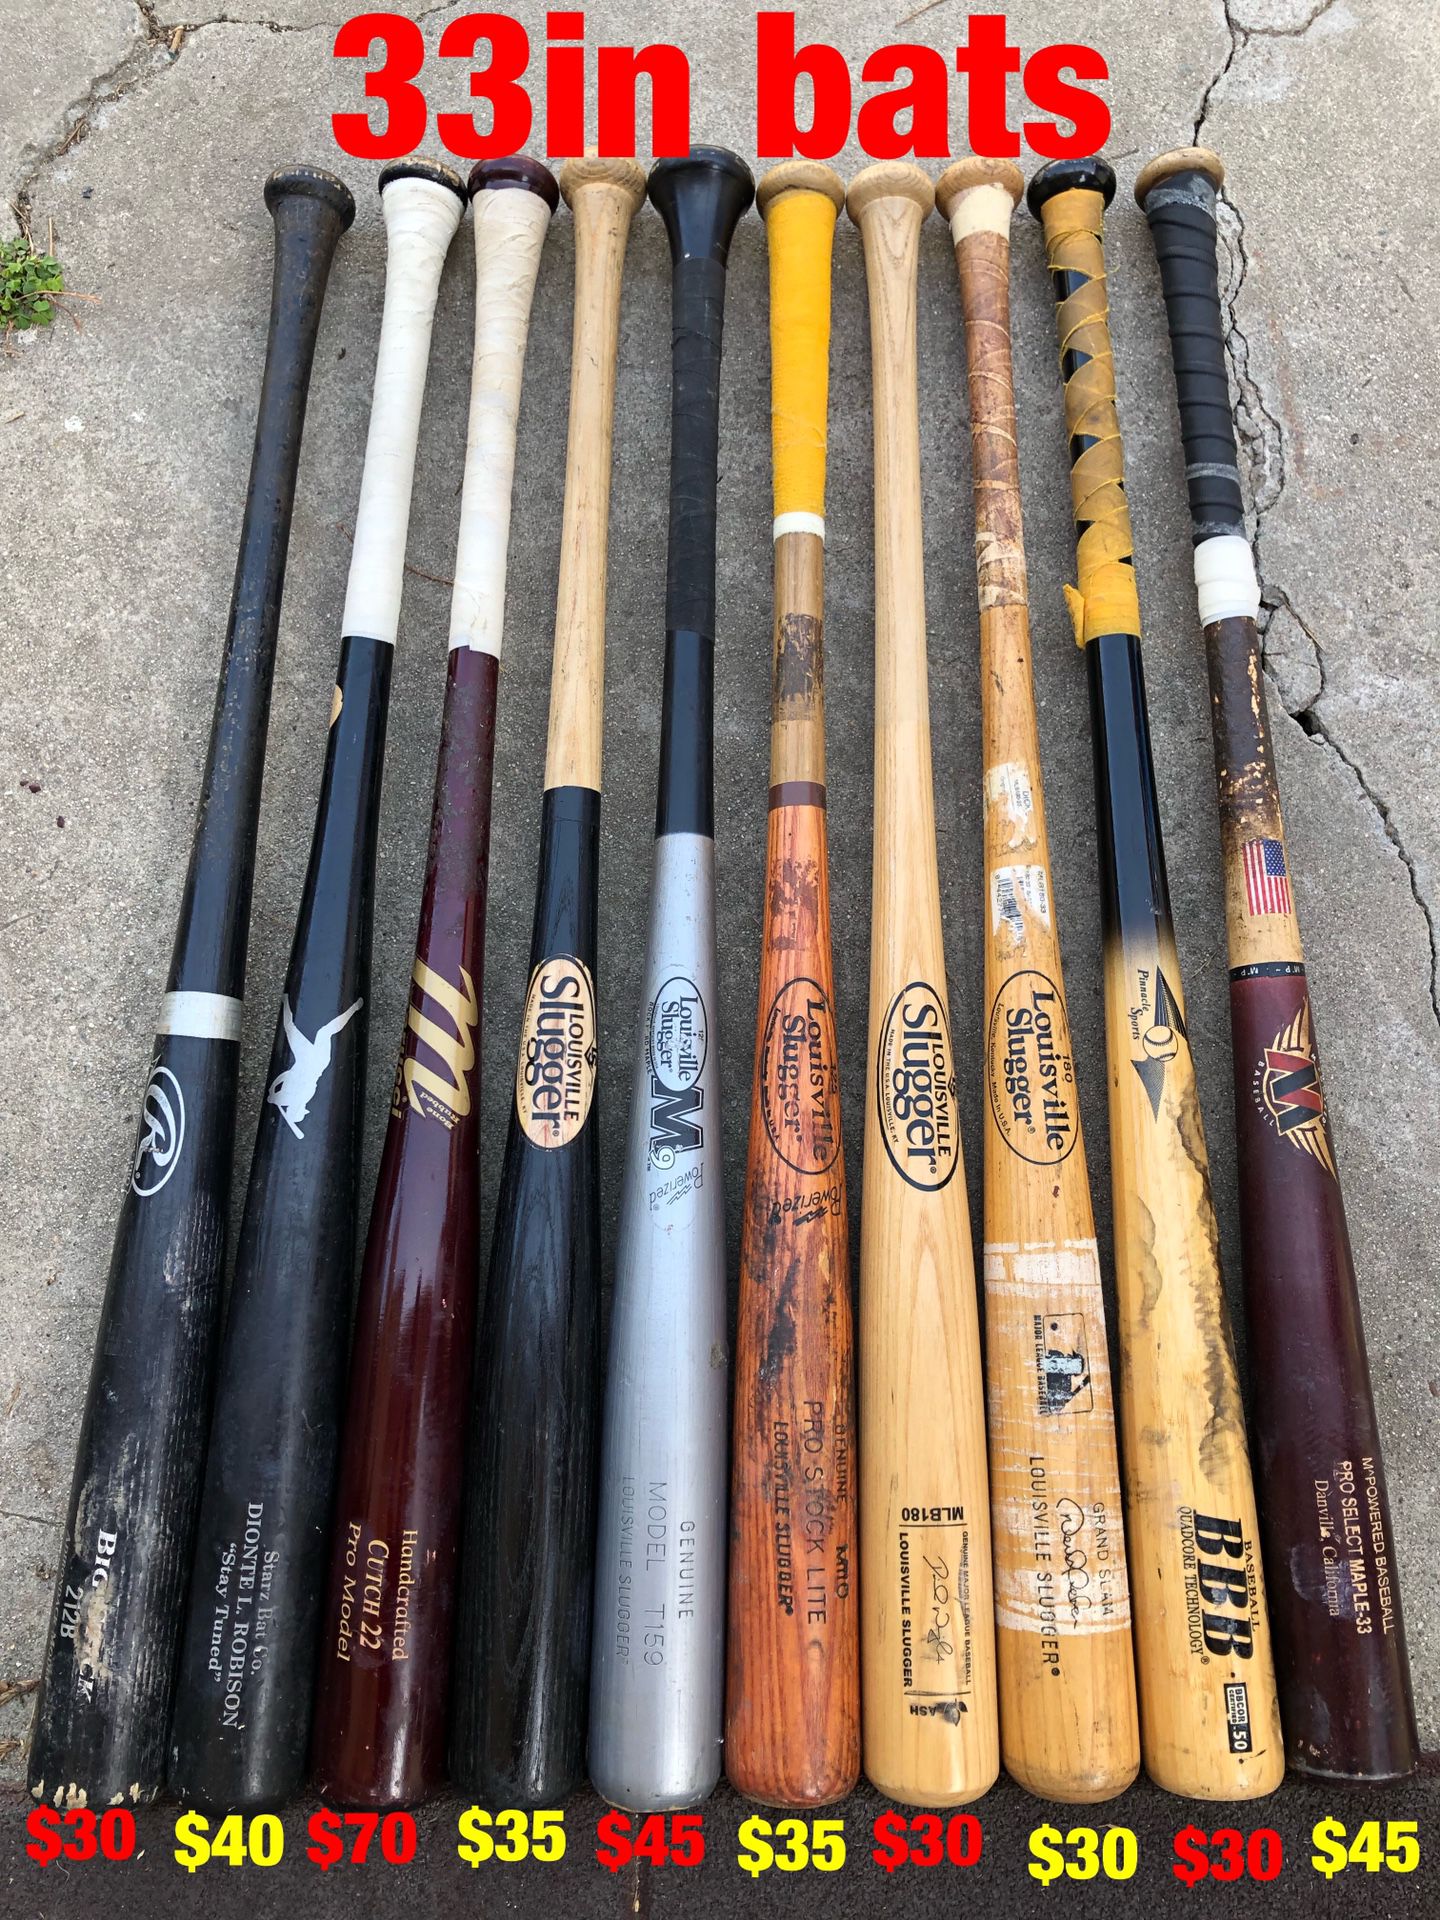 Baseball wood bats equipment gloves marucci Louisville slugger pro stock Rawlings demarini Easton